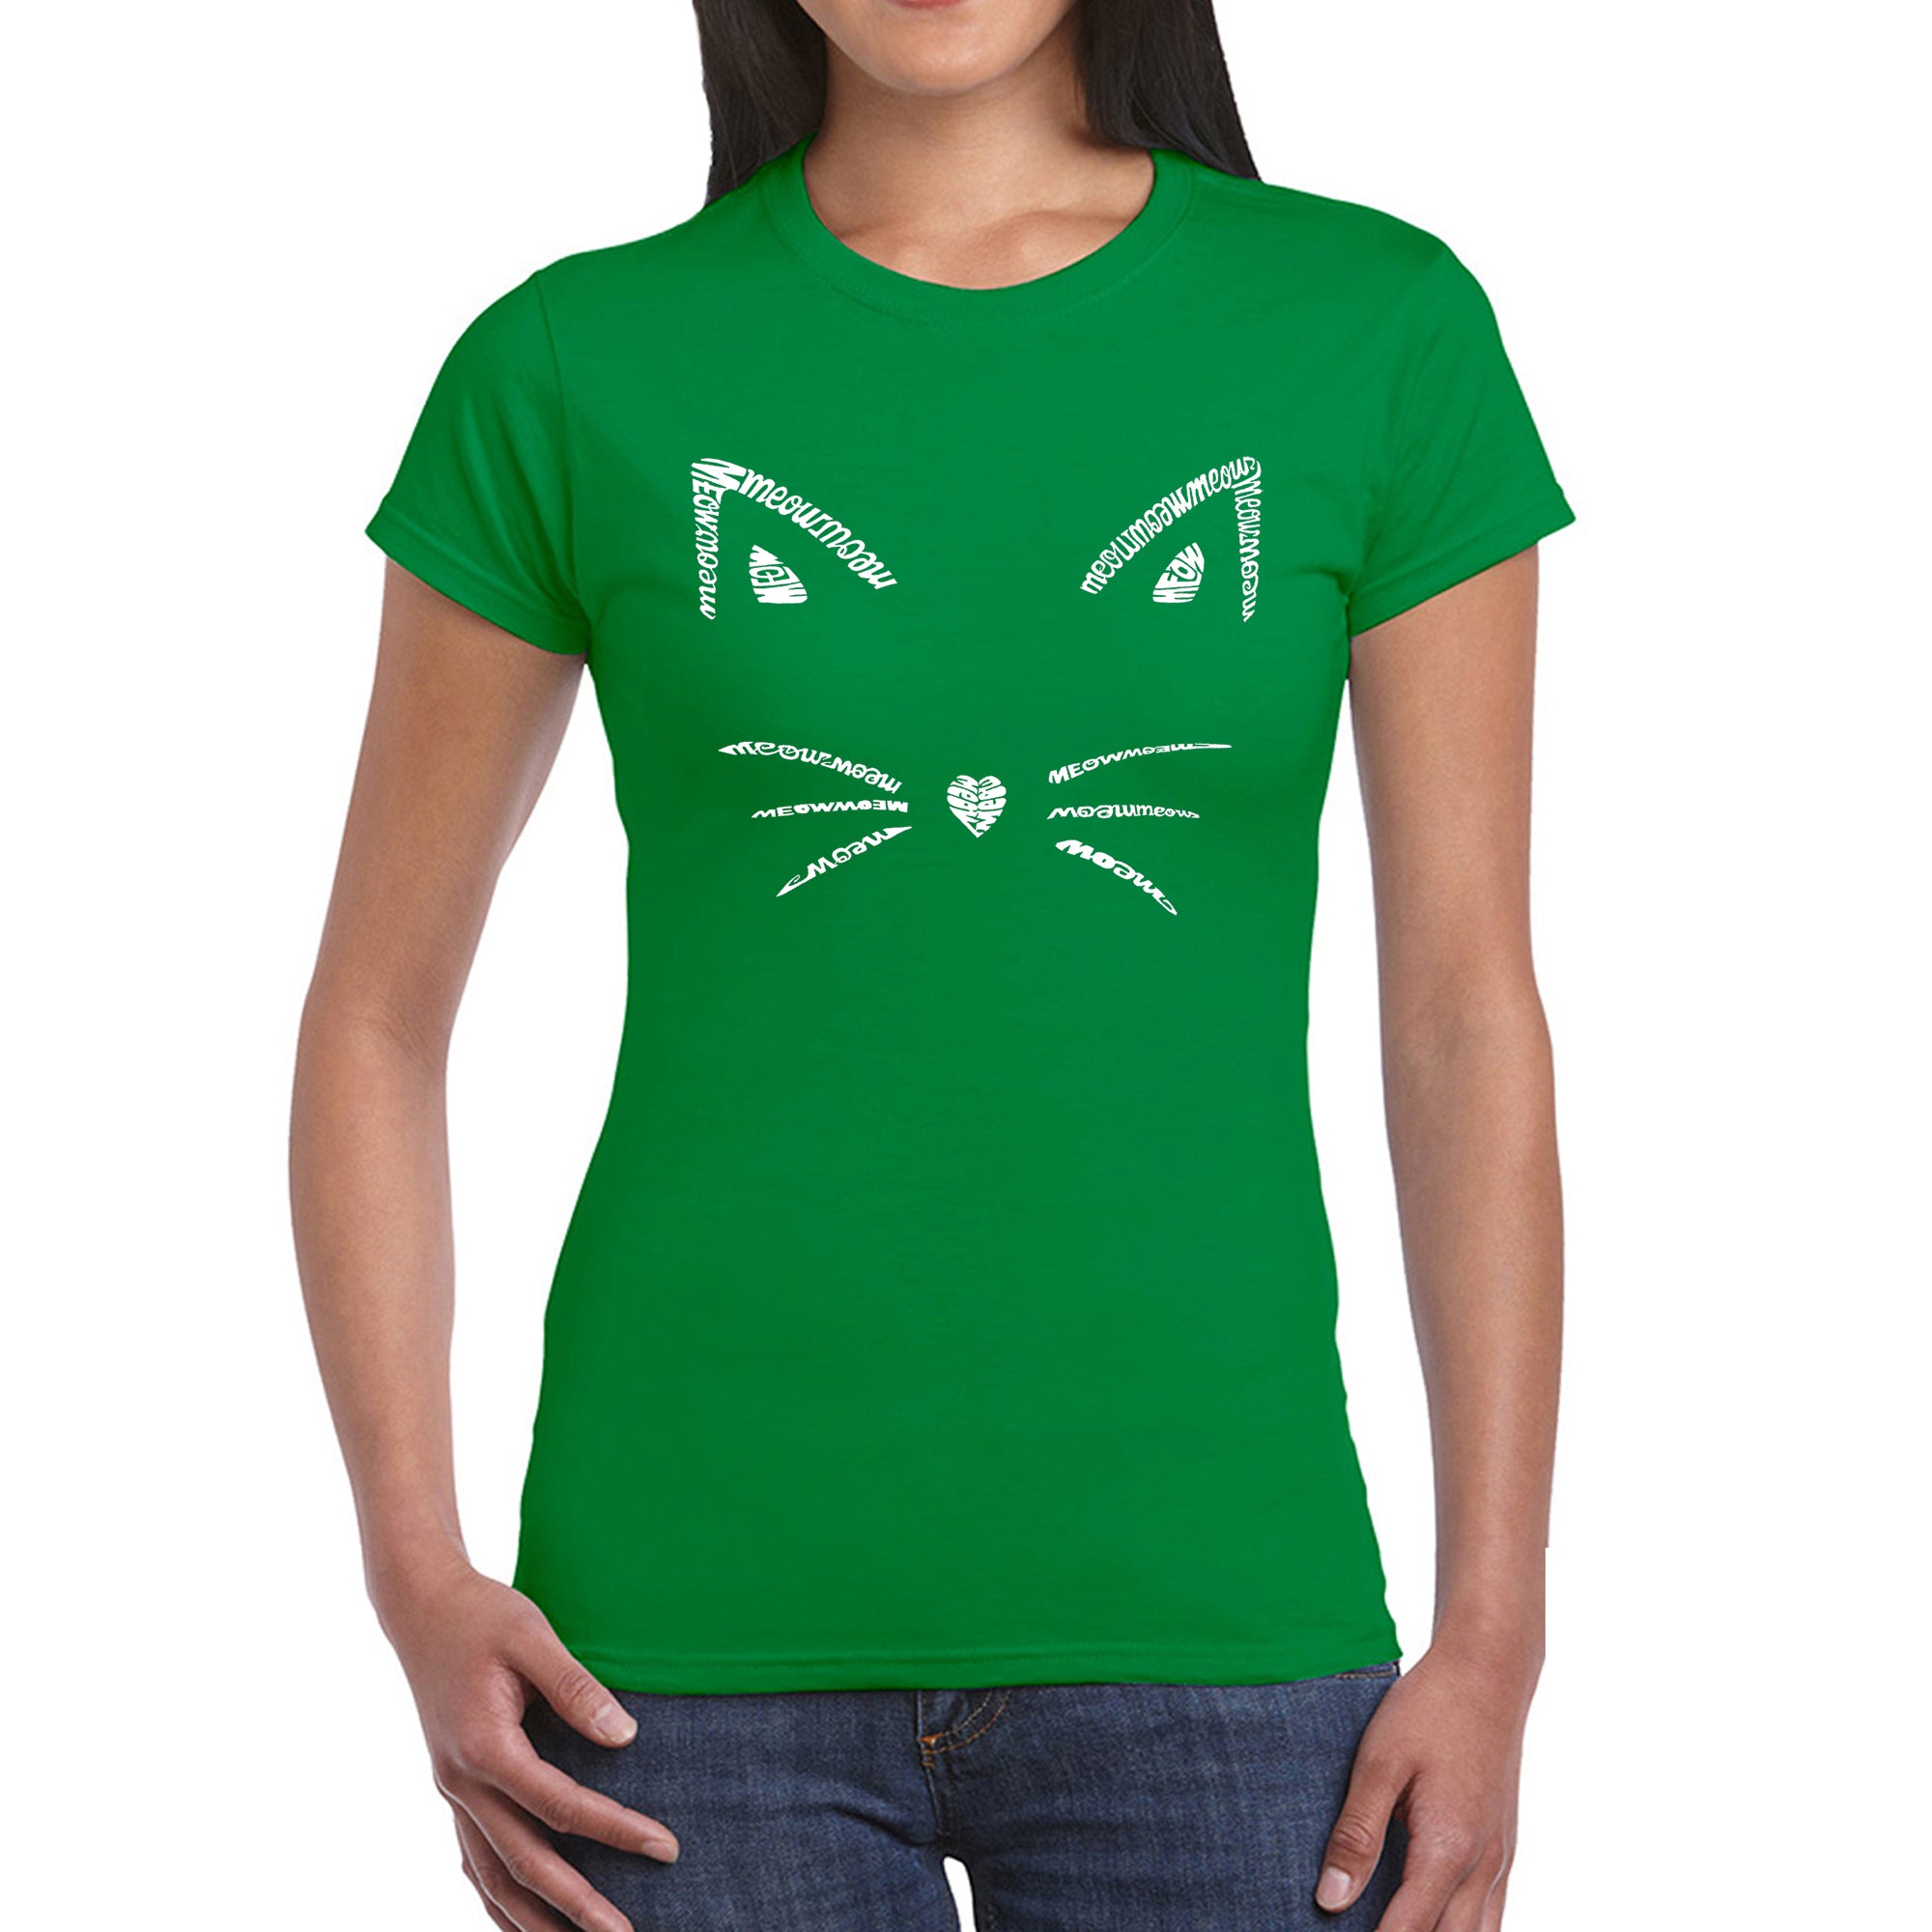 Whiskers - Women's Word Art T-Shirt - Kelly - XS